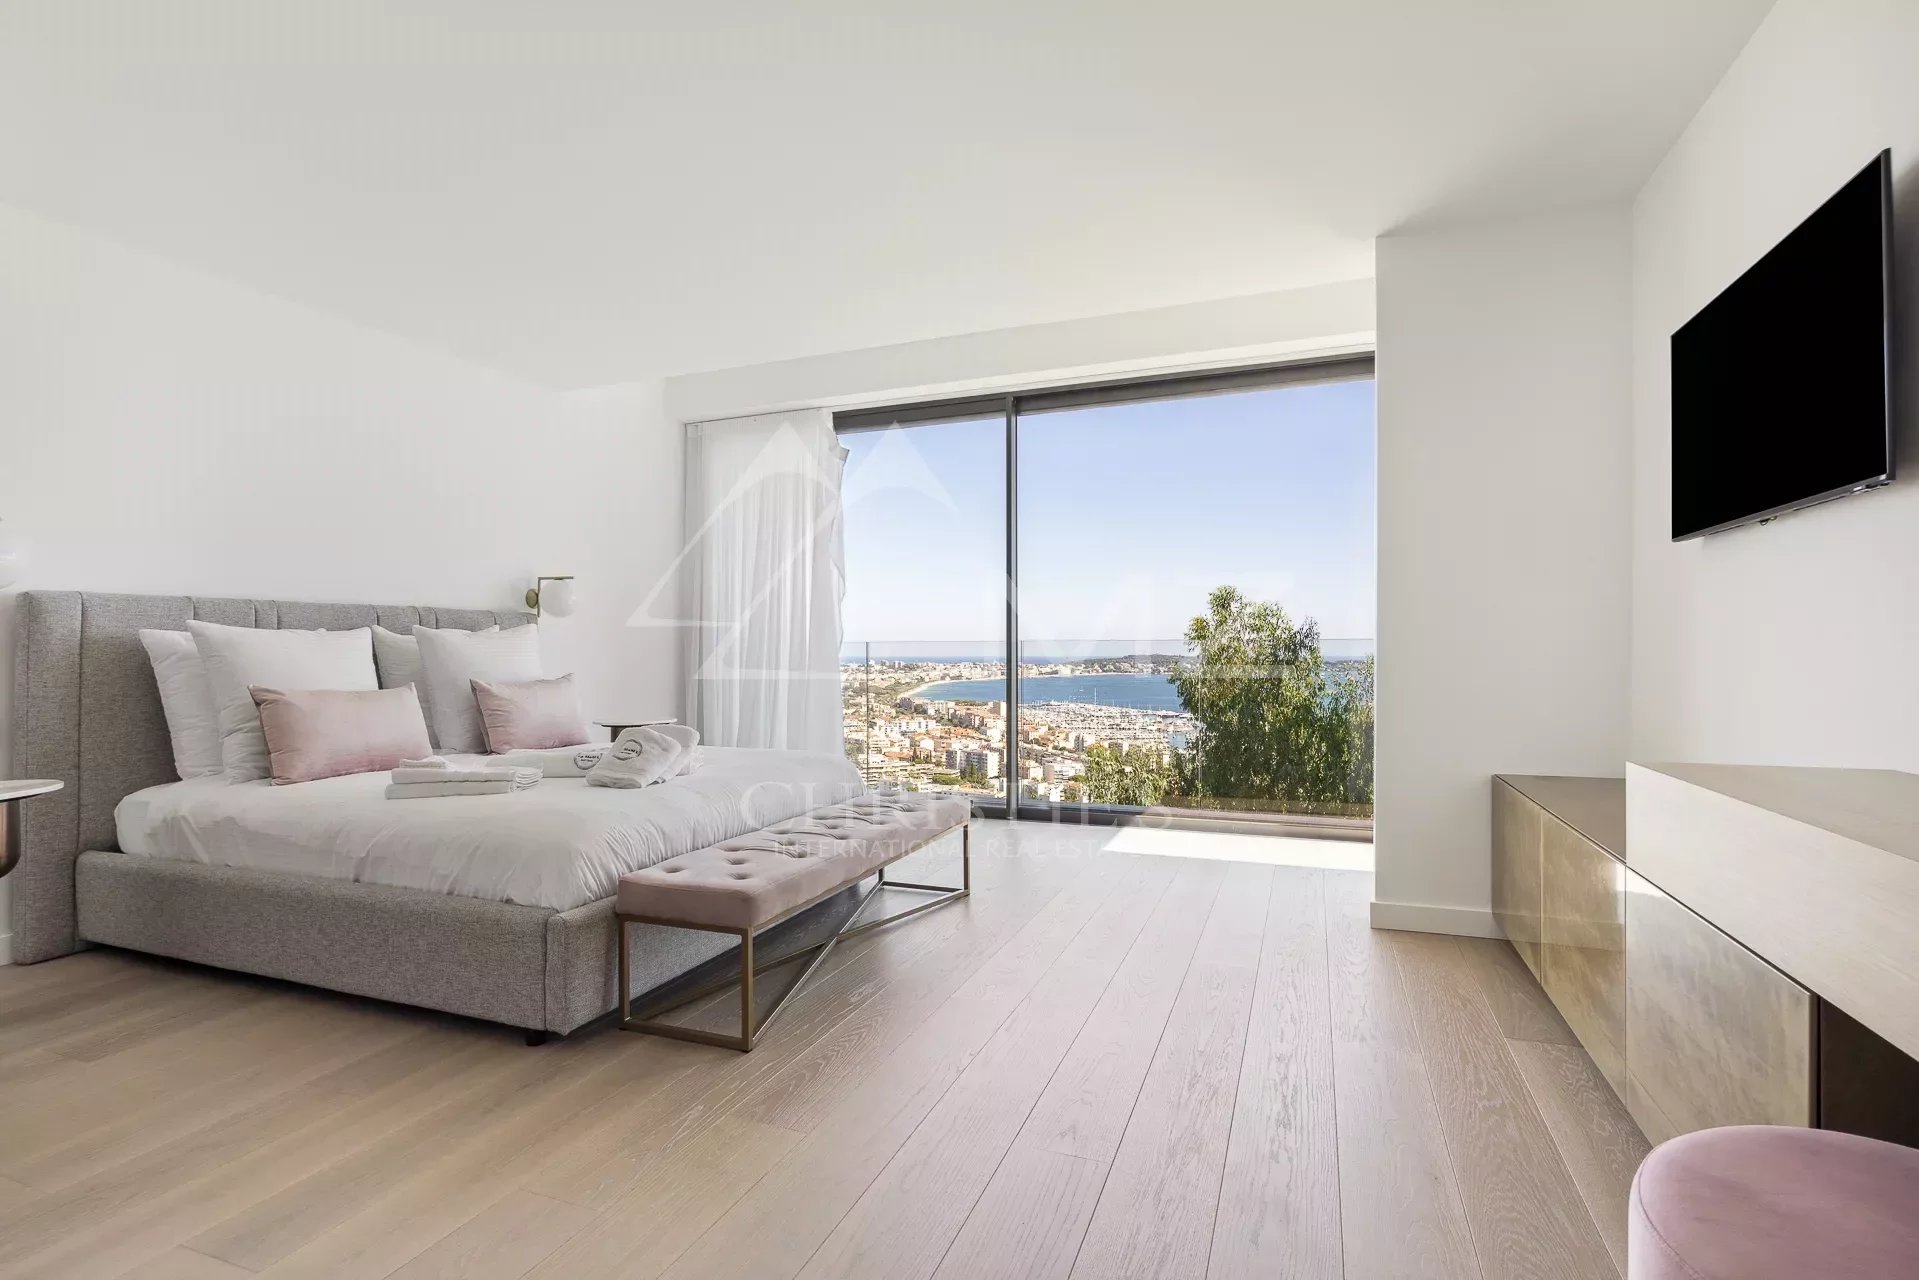 Super Cannes - Modern 5 bedrooms villa